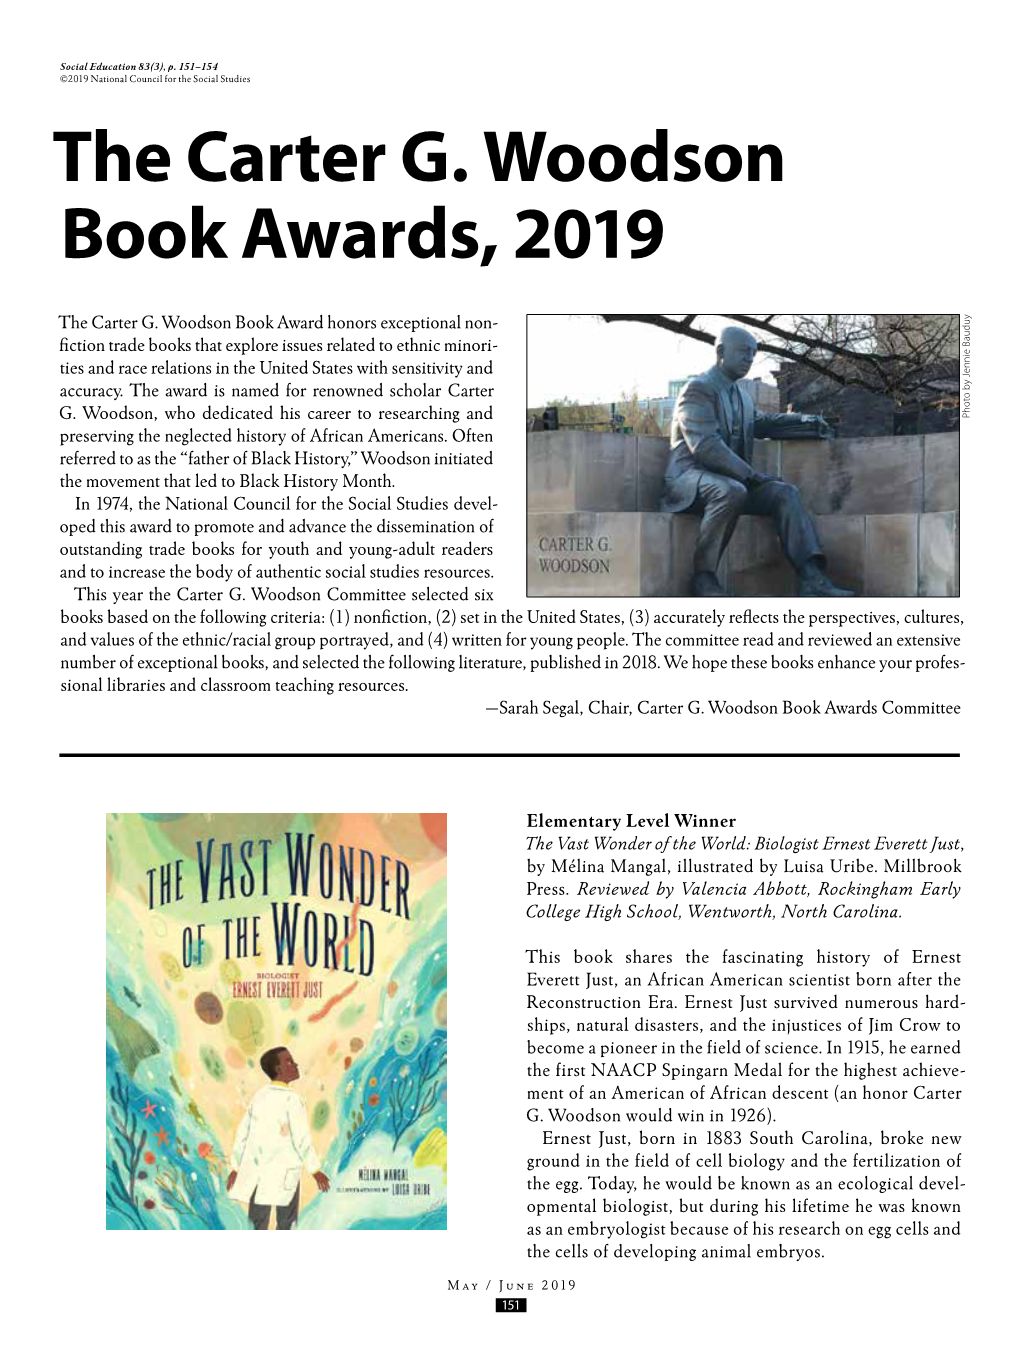 The Carter G. Woodson Book Awards, 2019